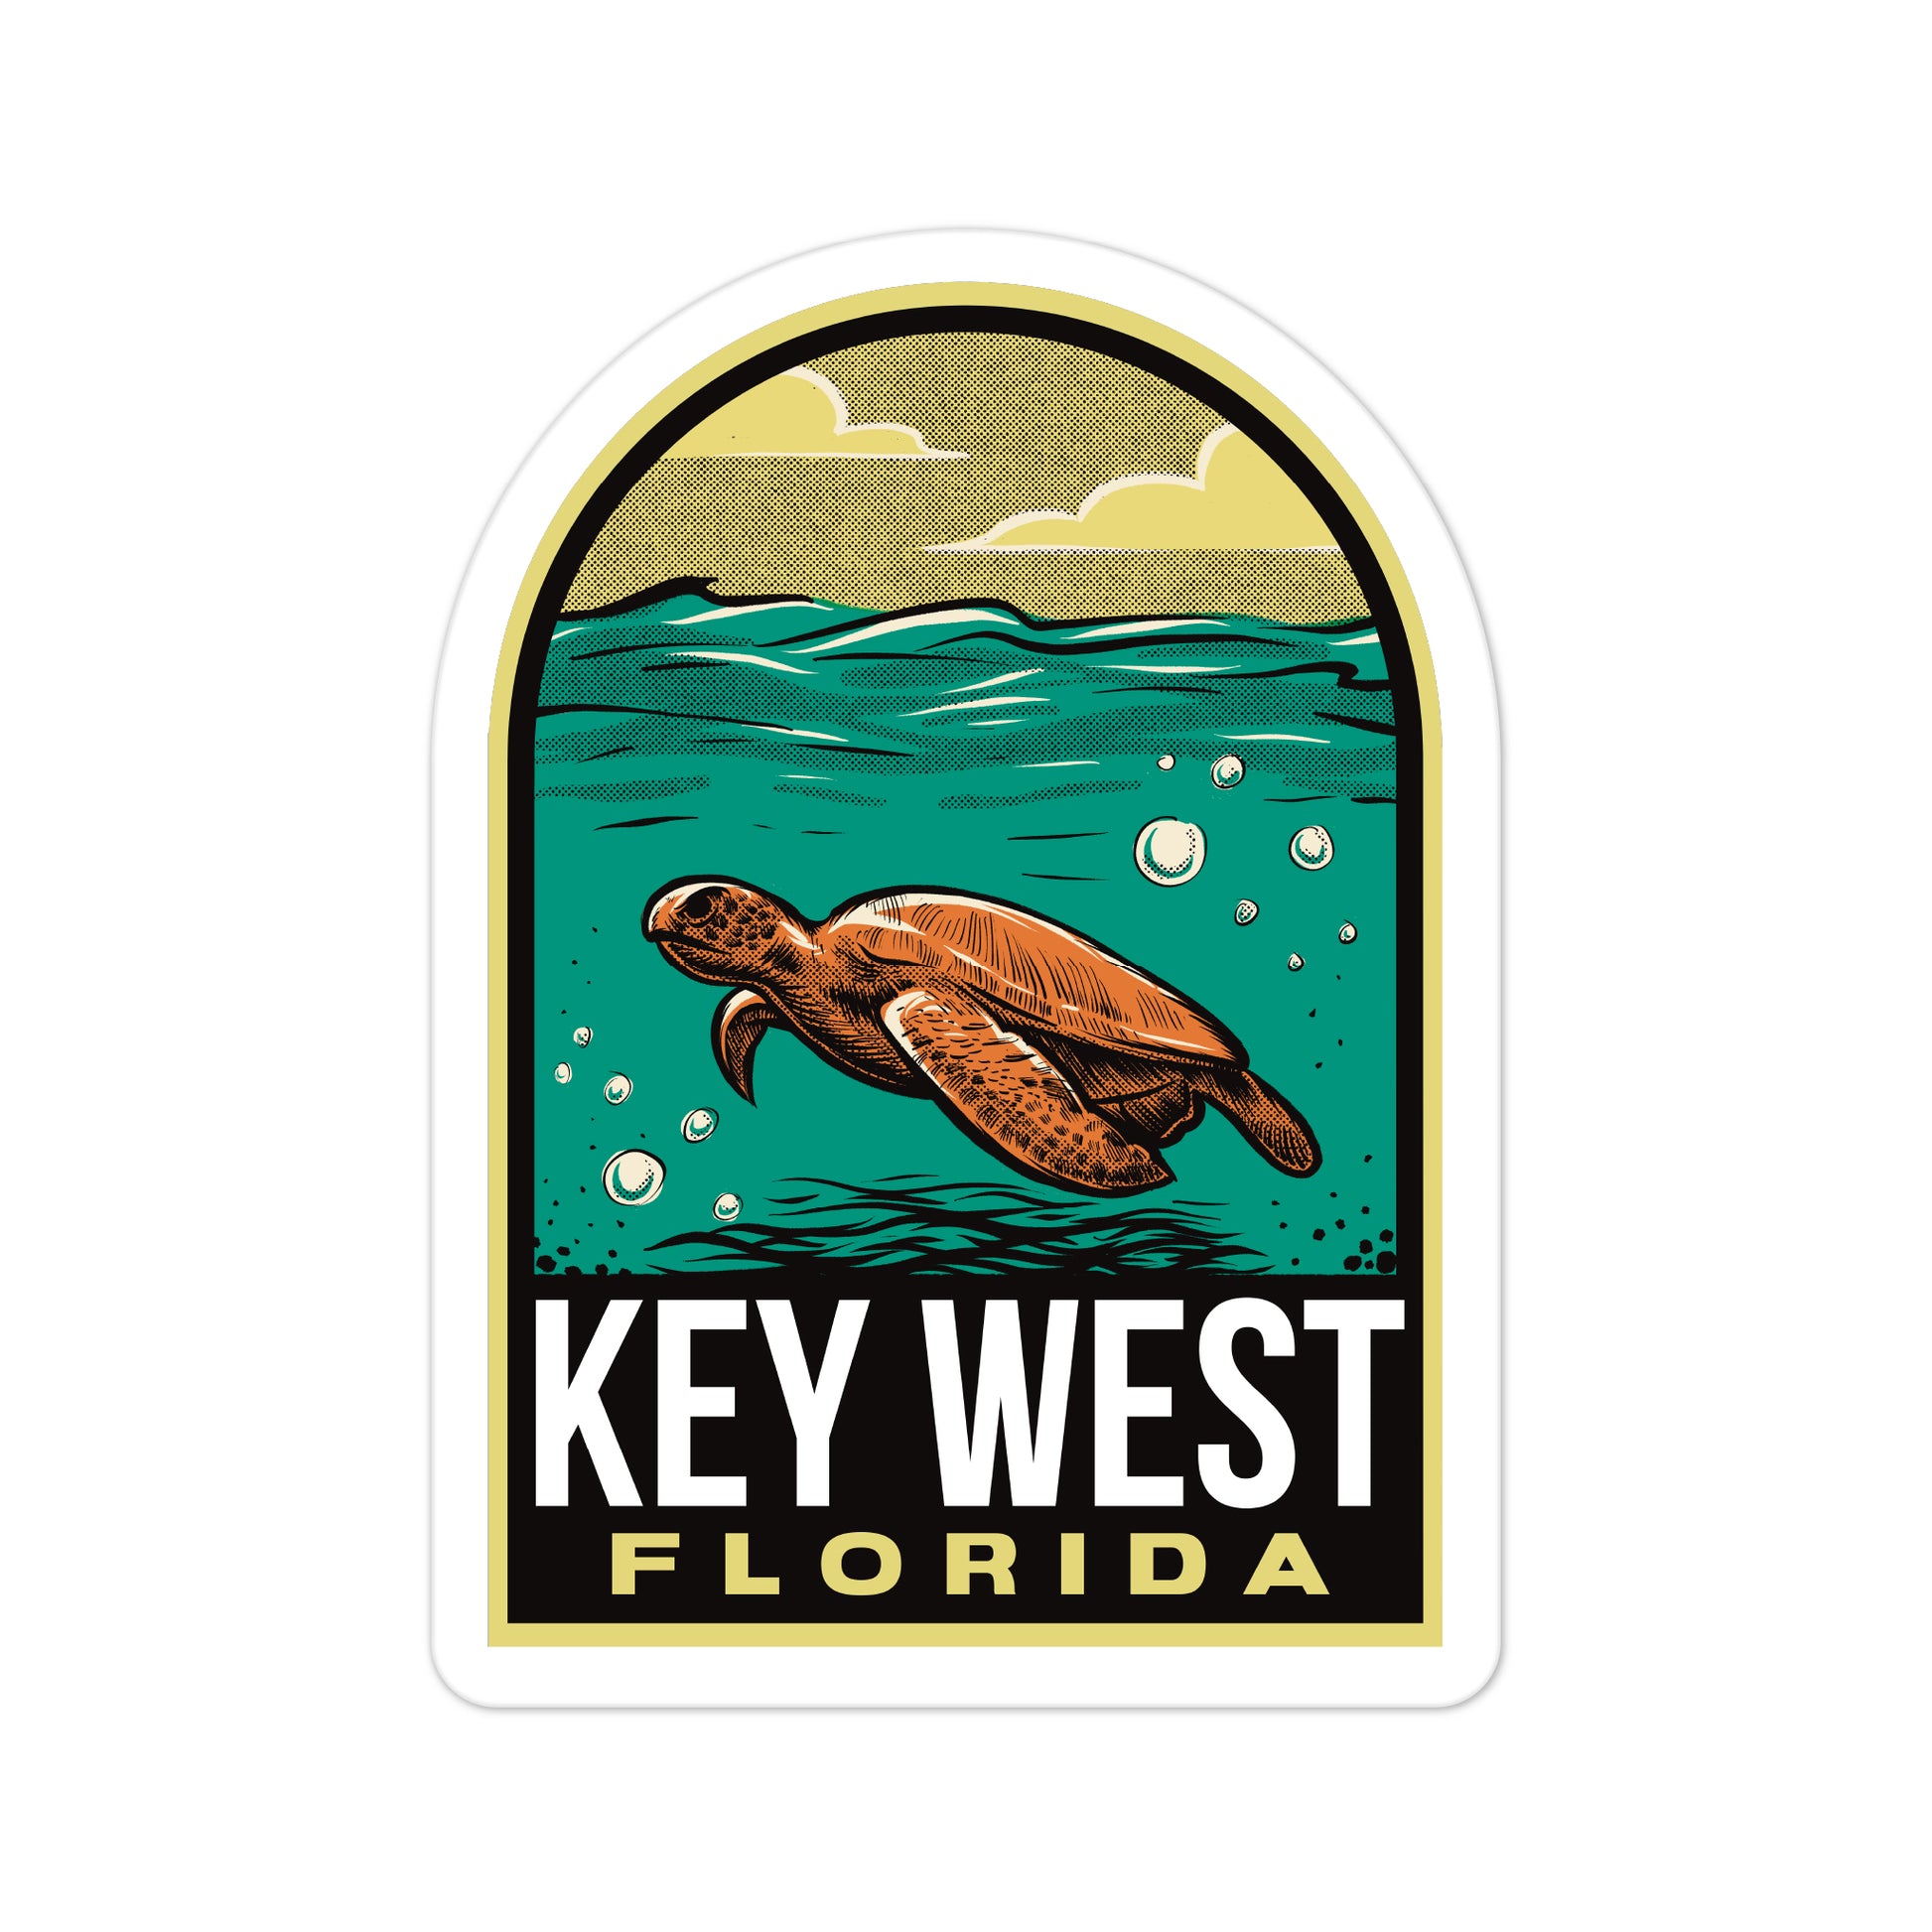 A sticker of Key West Florida